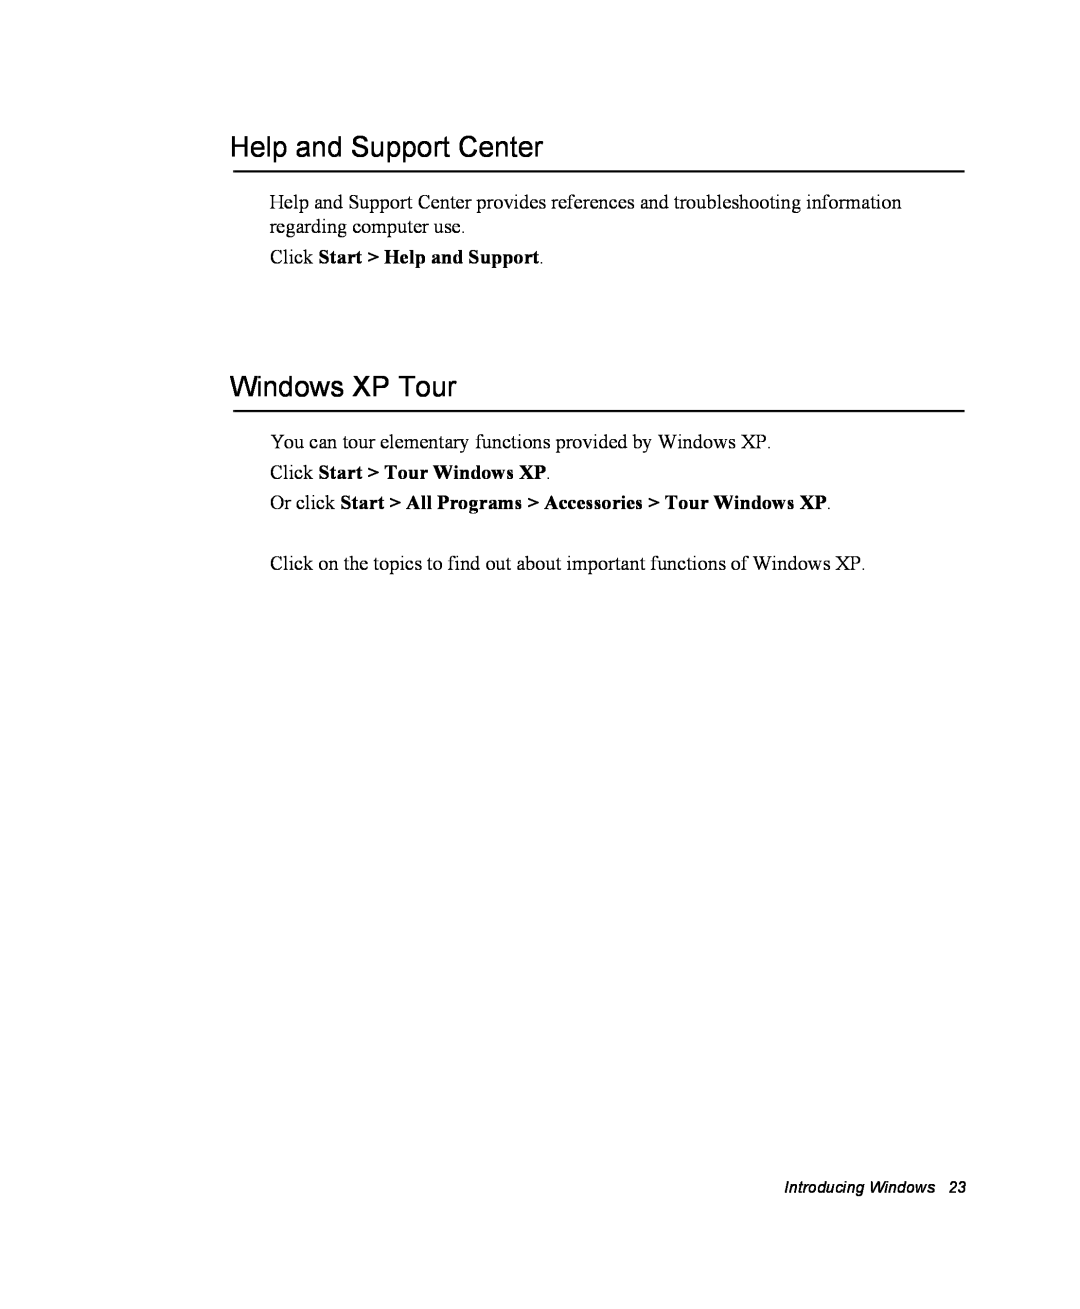 Samsung NM40PRDV02/SEF Help and Support Center, Windows XP Tour, Click Start Help and Support, Click Start Tour Windows XP 